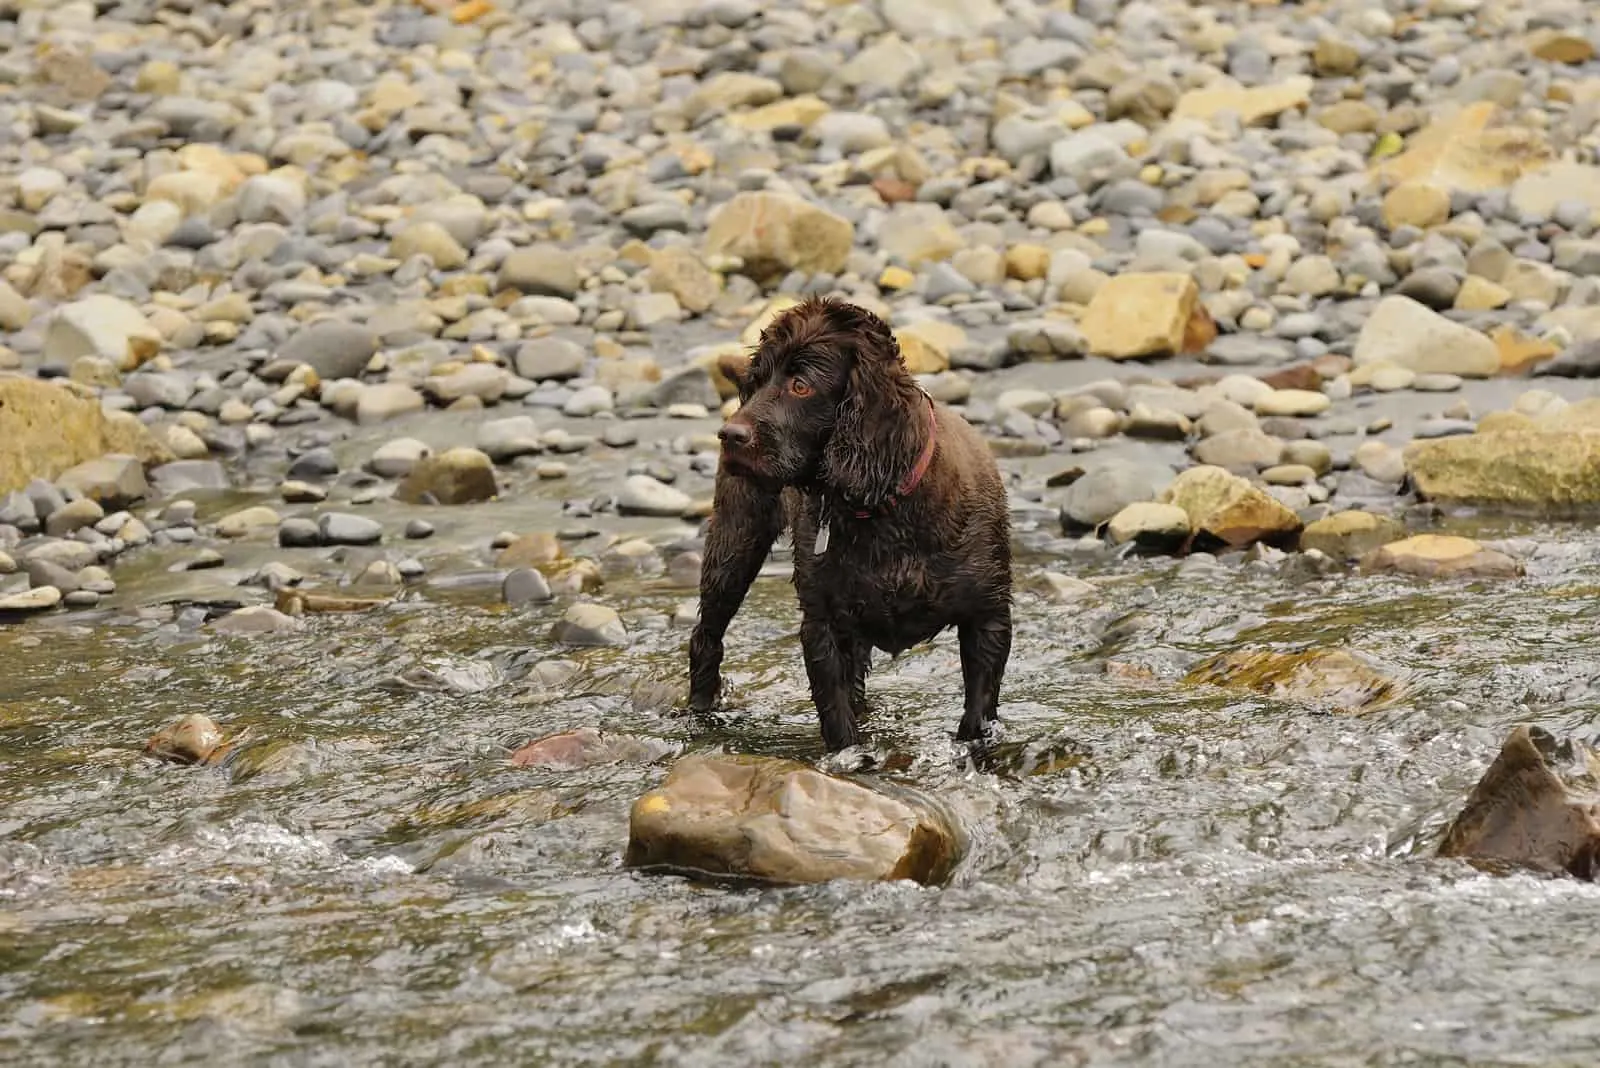 Boykin Spaniel standing in the river